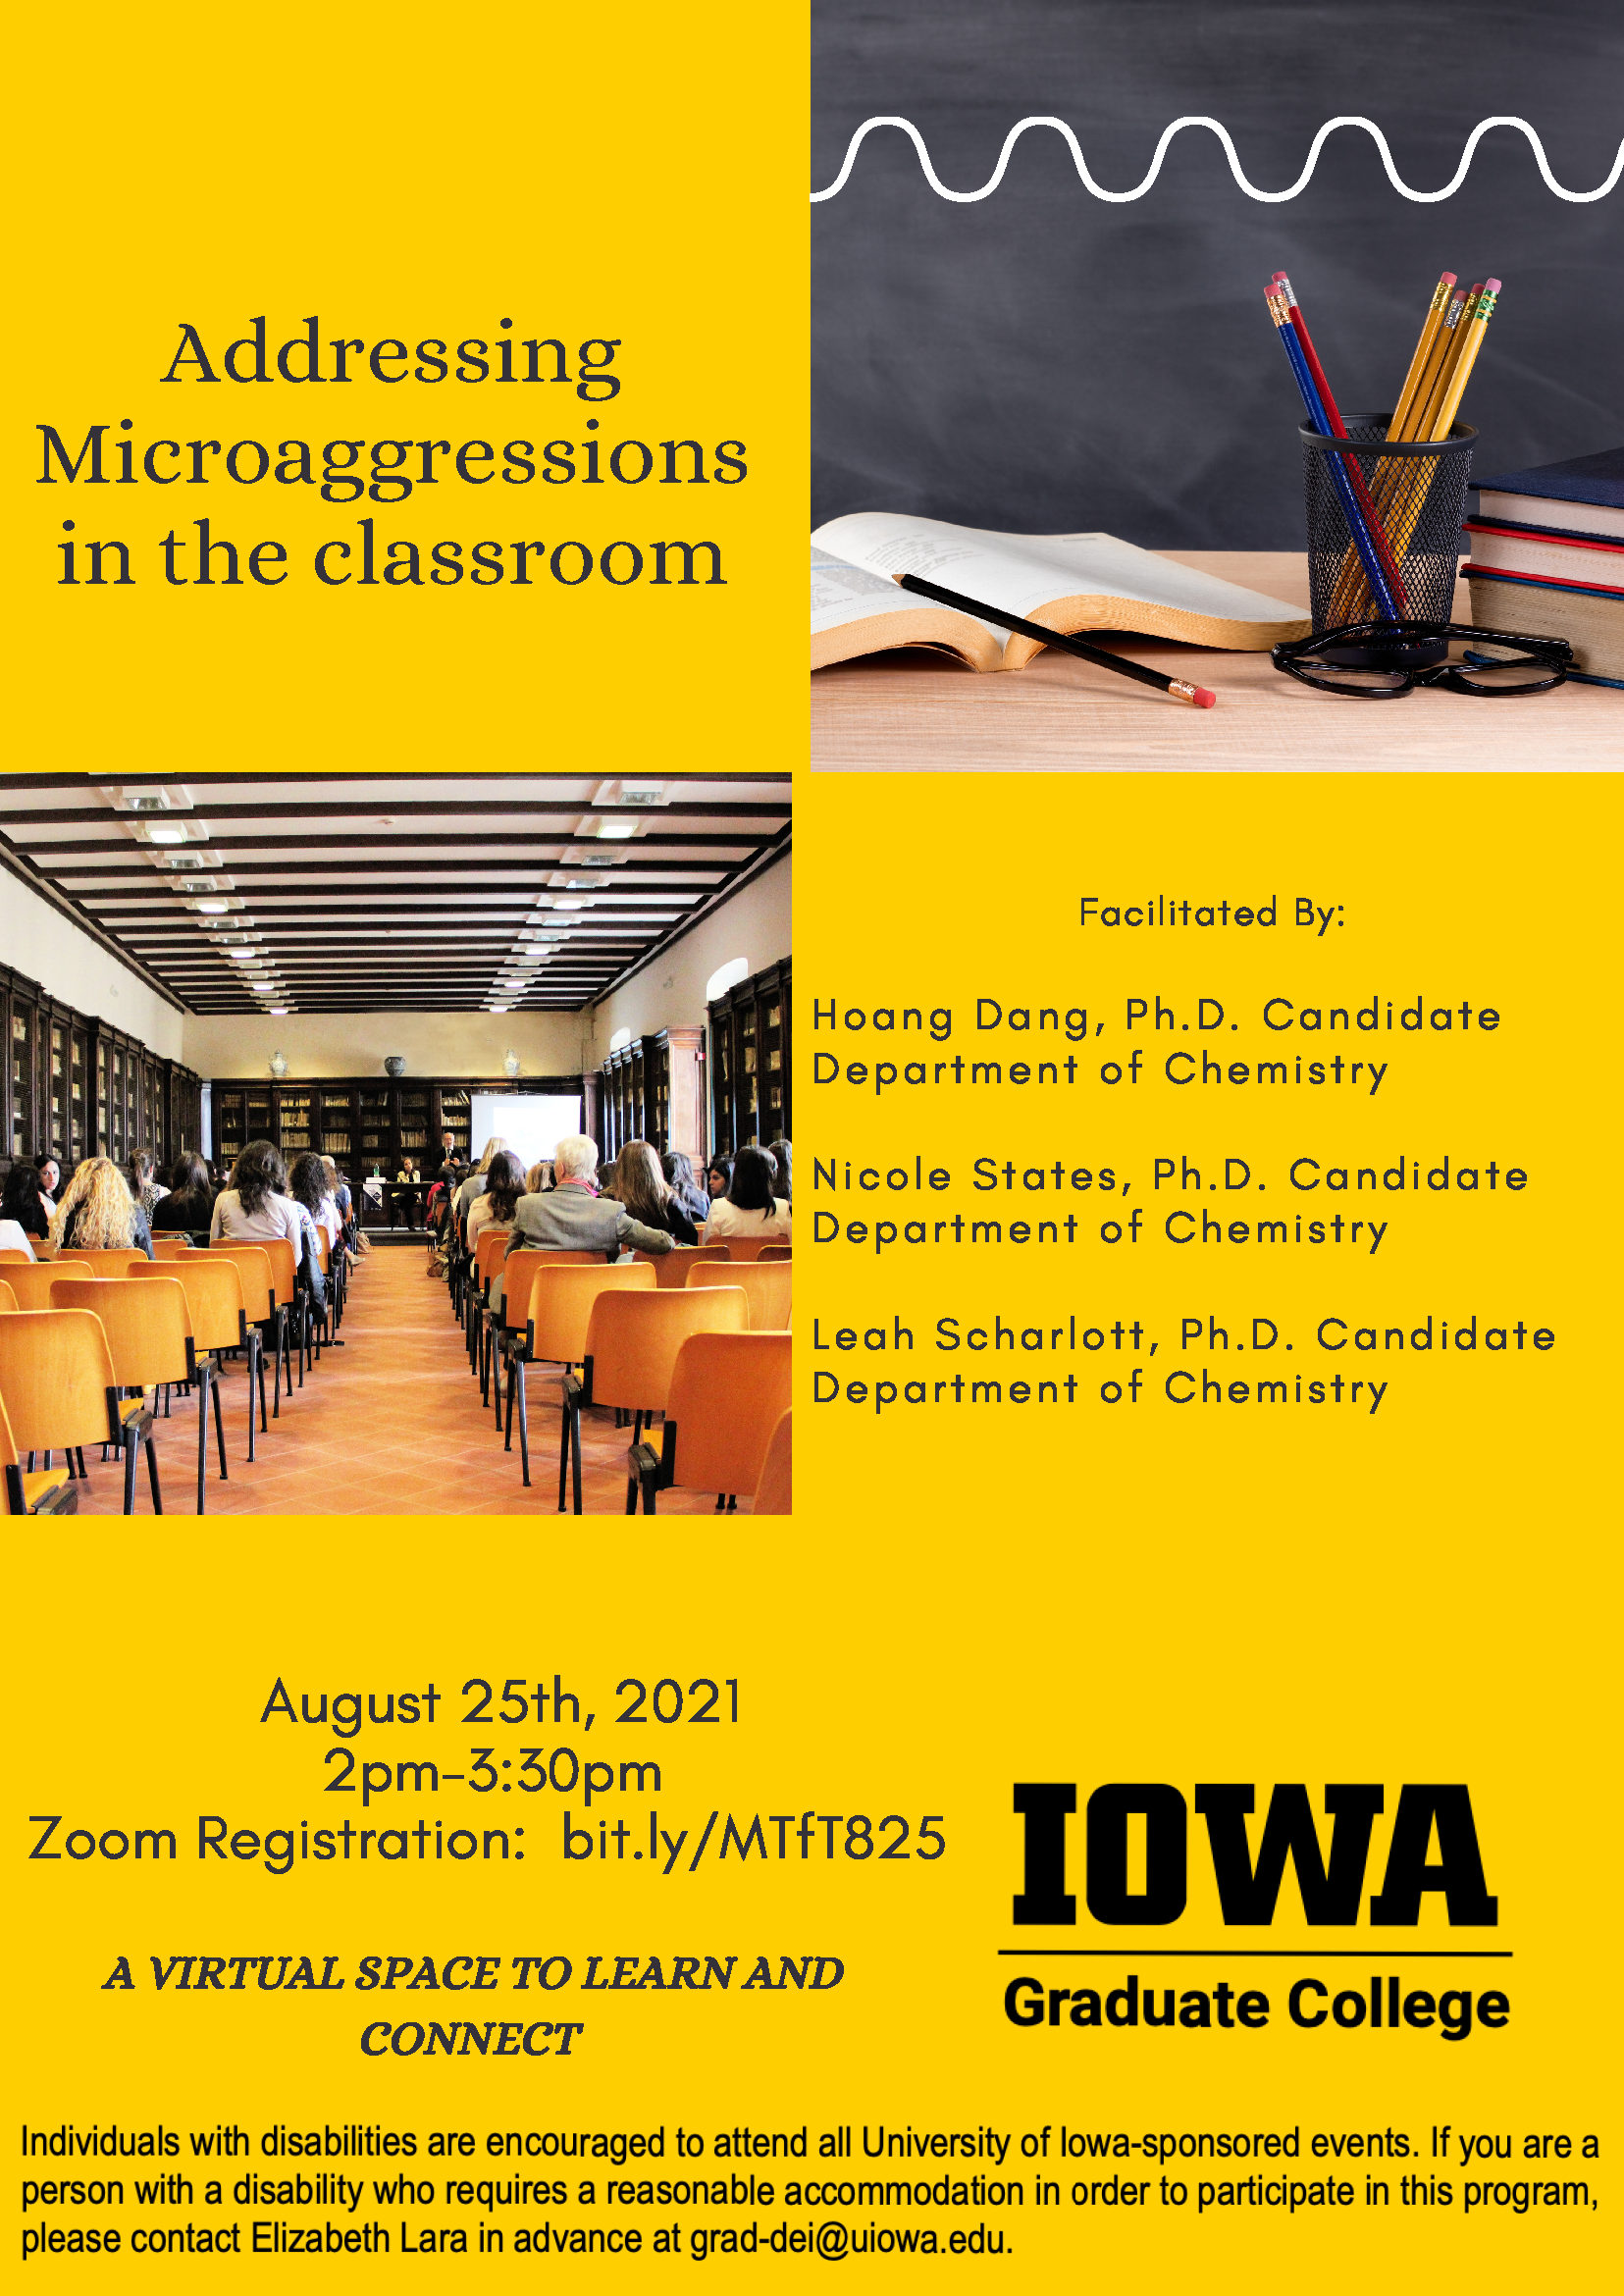 Addressing Microaggressions Training for TAs